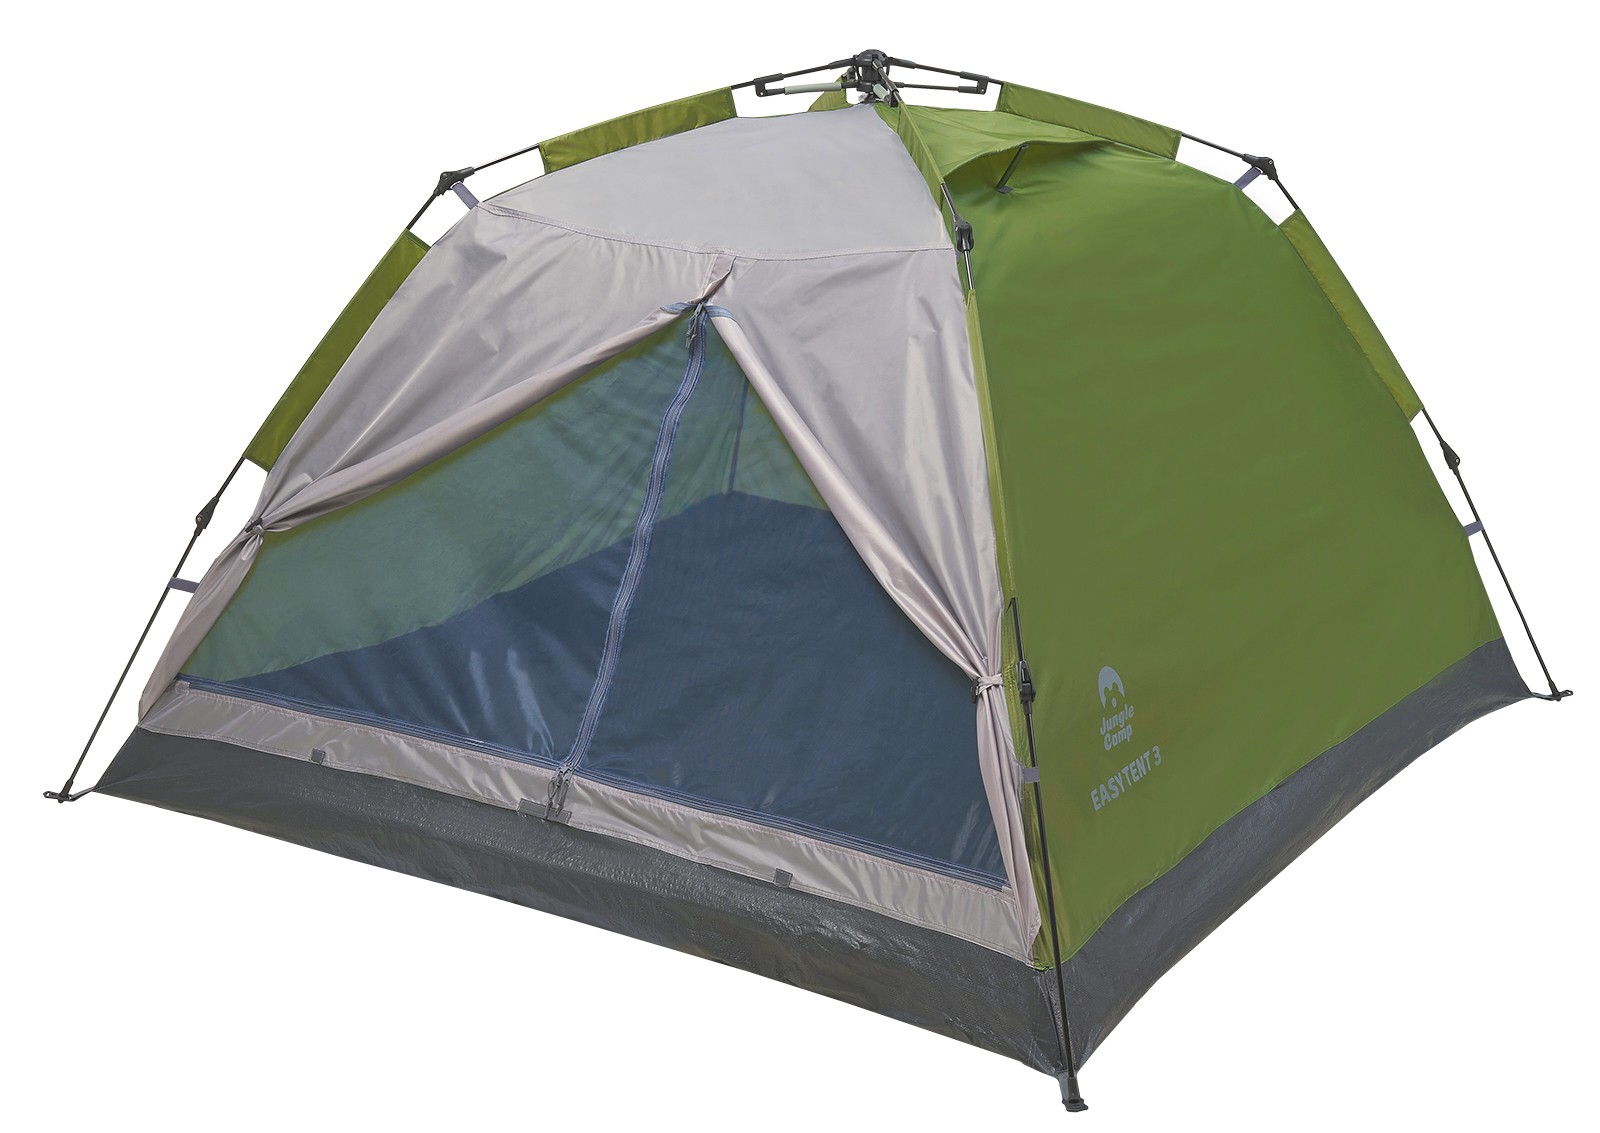 Палатка Jungle Camp Easy Tent 2 зеленый/серый - фото 1